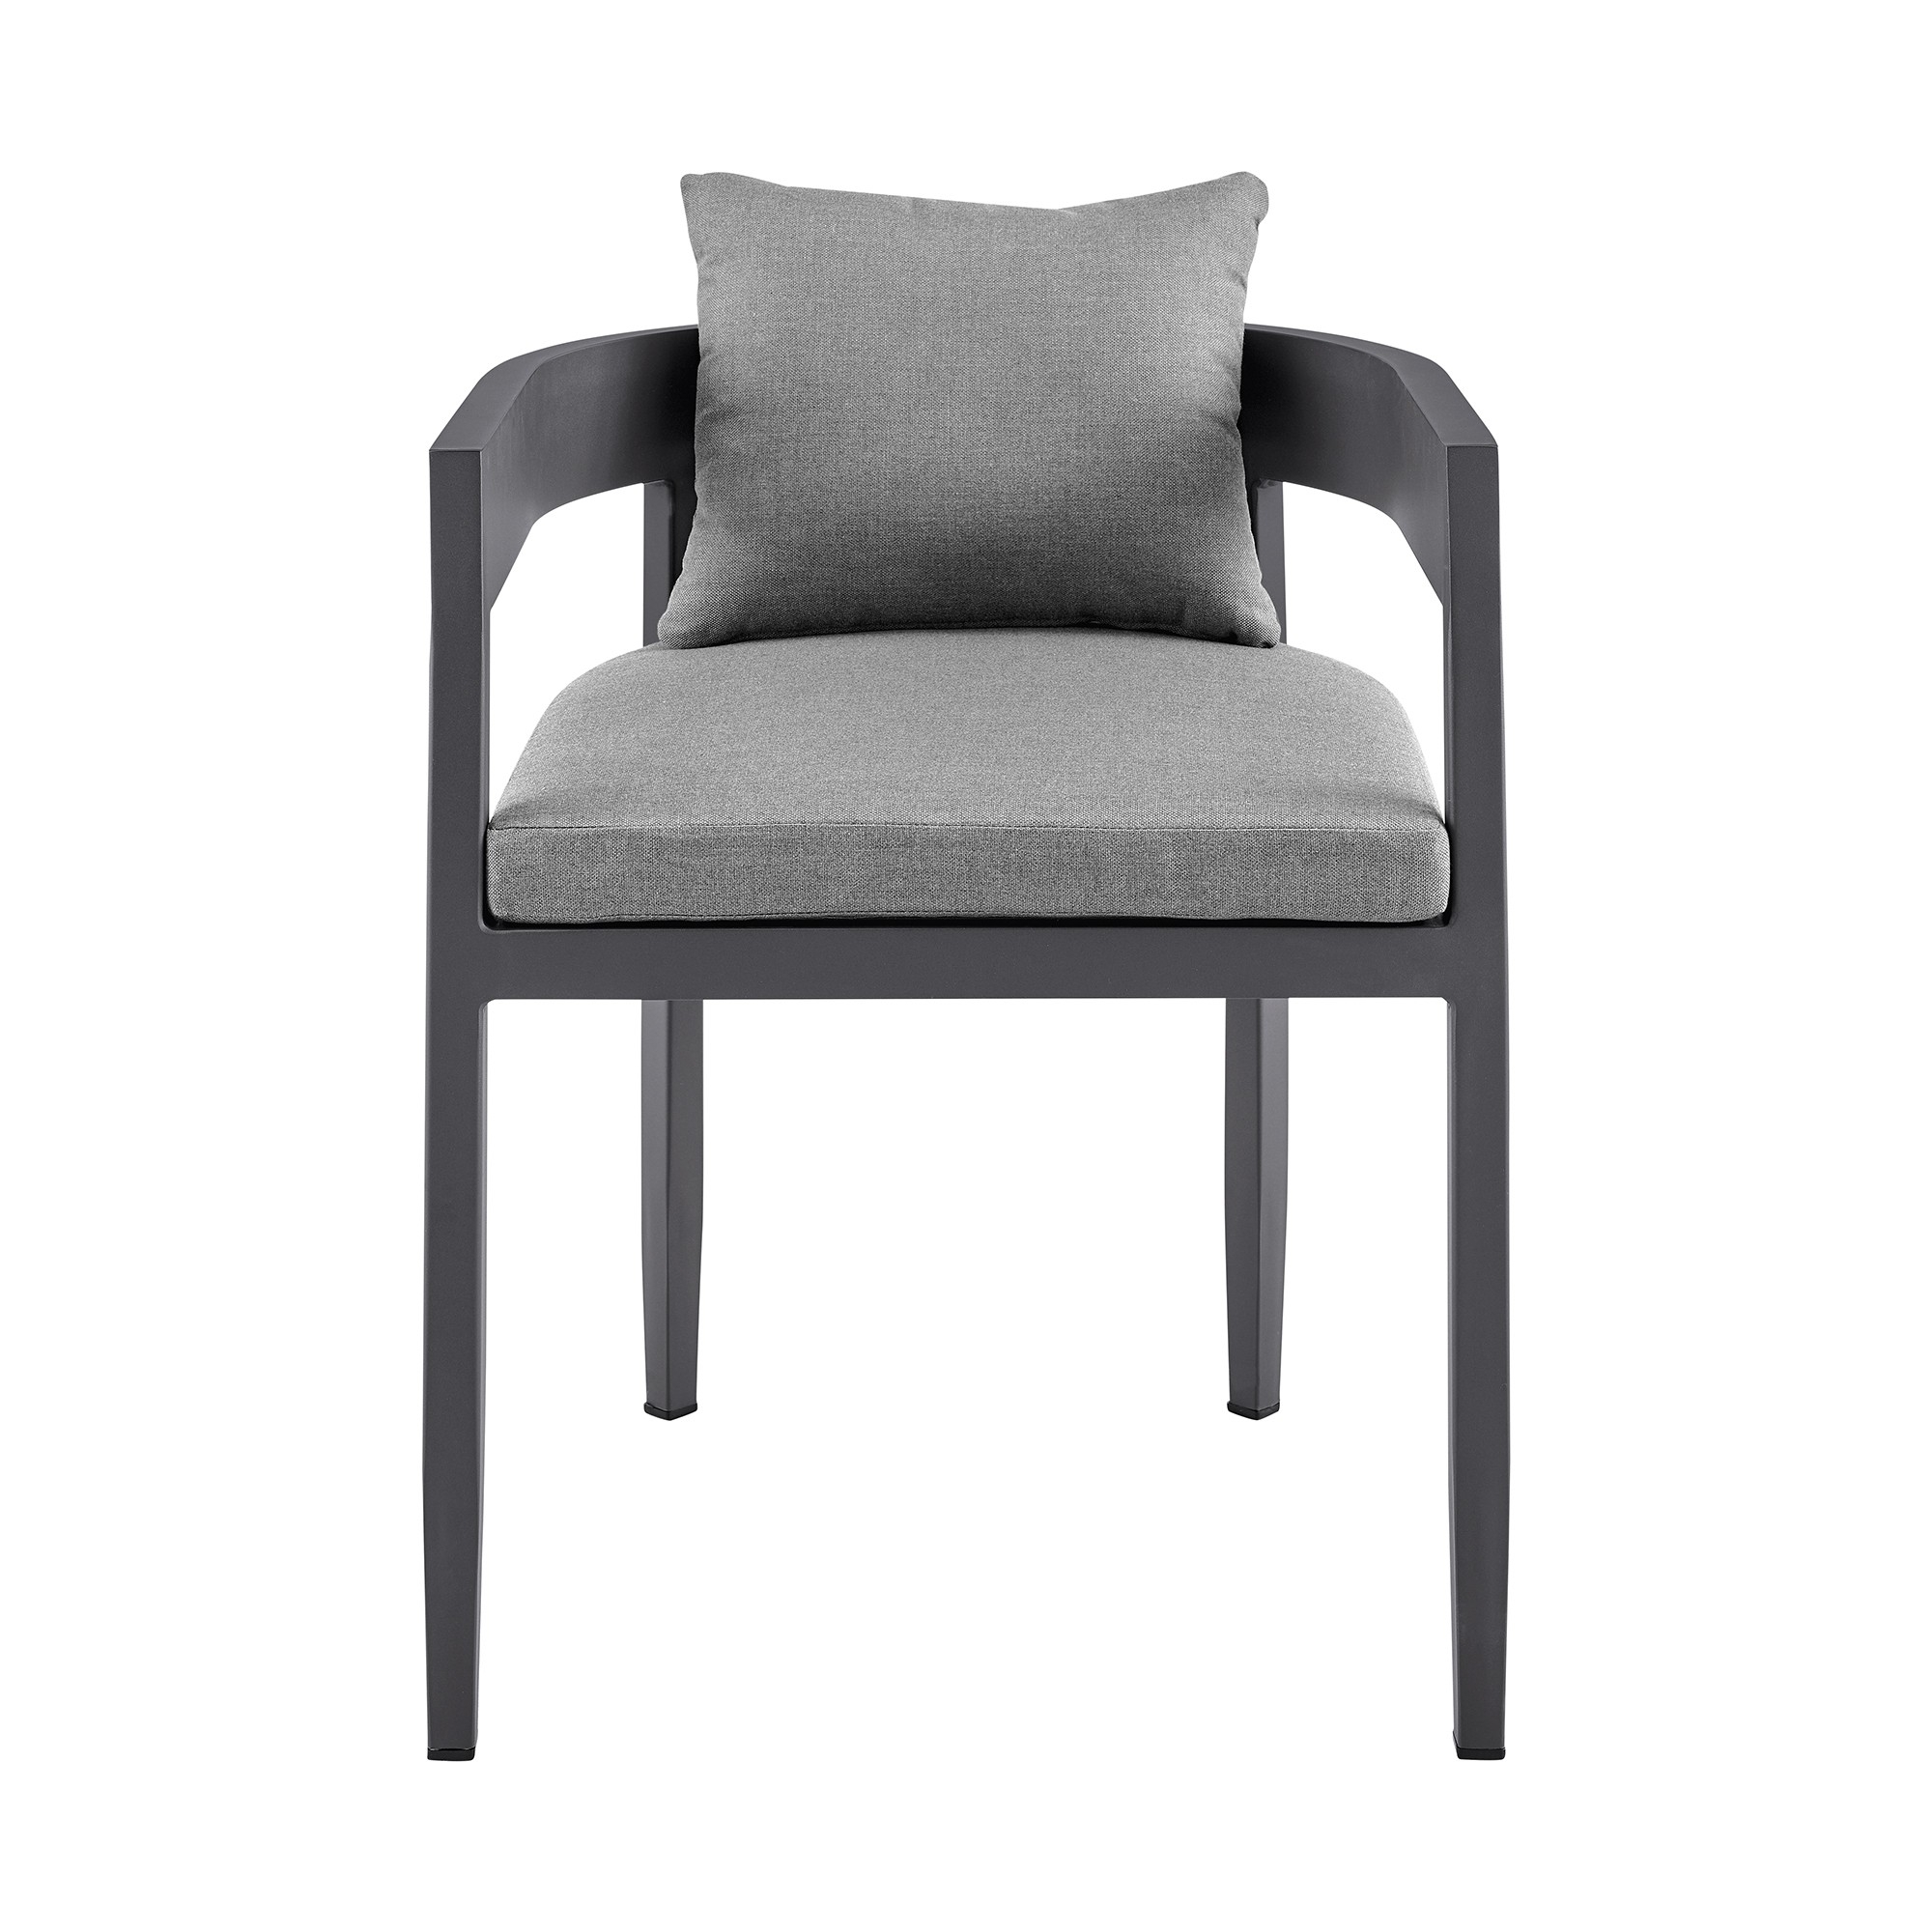 Jax 22 Inch Patio Dining Chair, Set Of 2, Aluminum Frame, Gray Cushions- Saltoro Sherpi